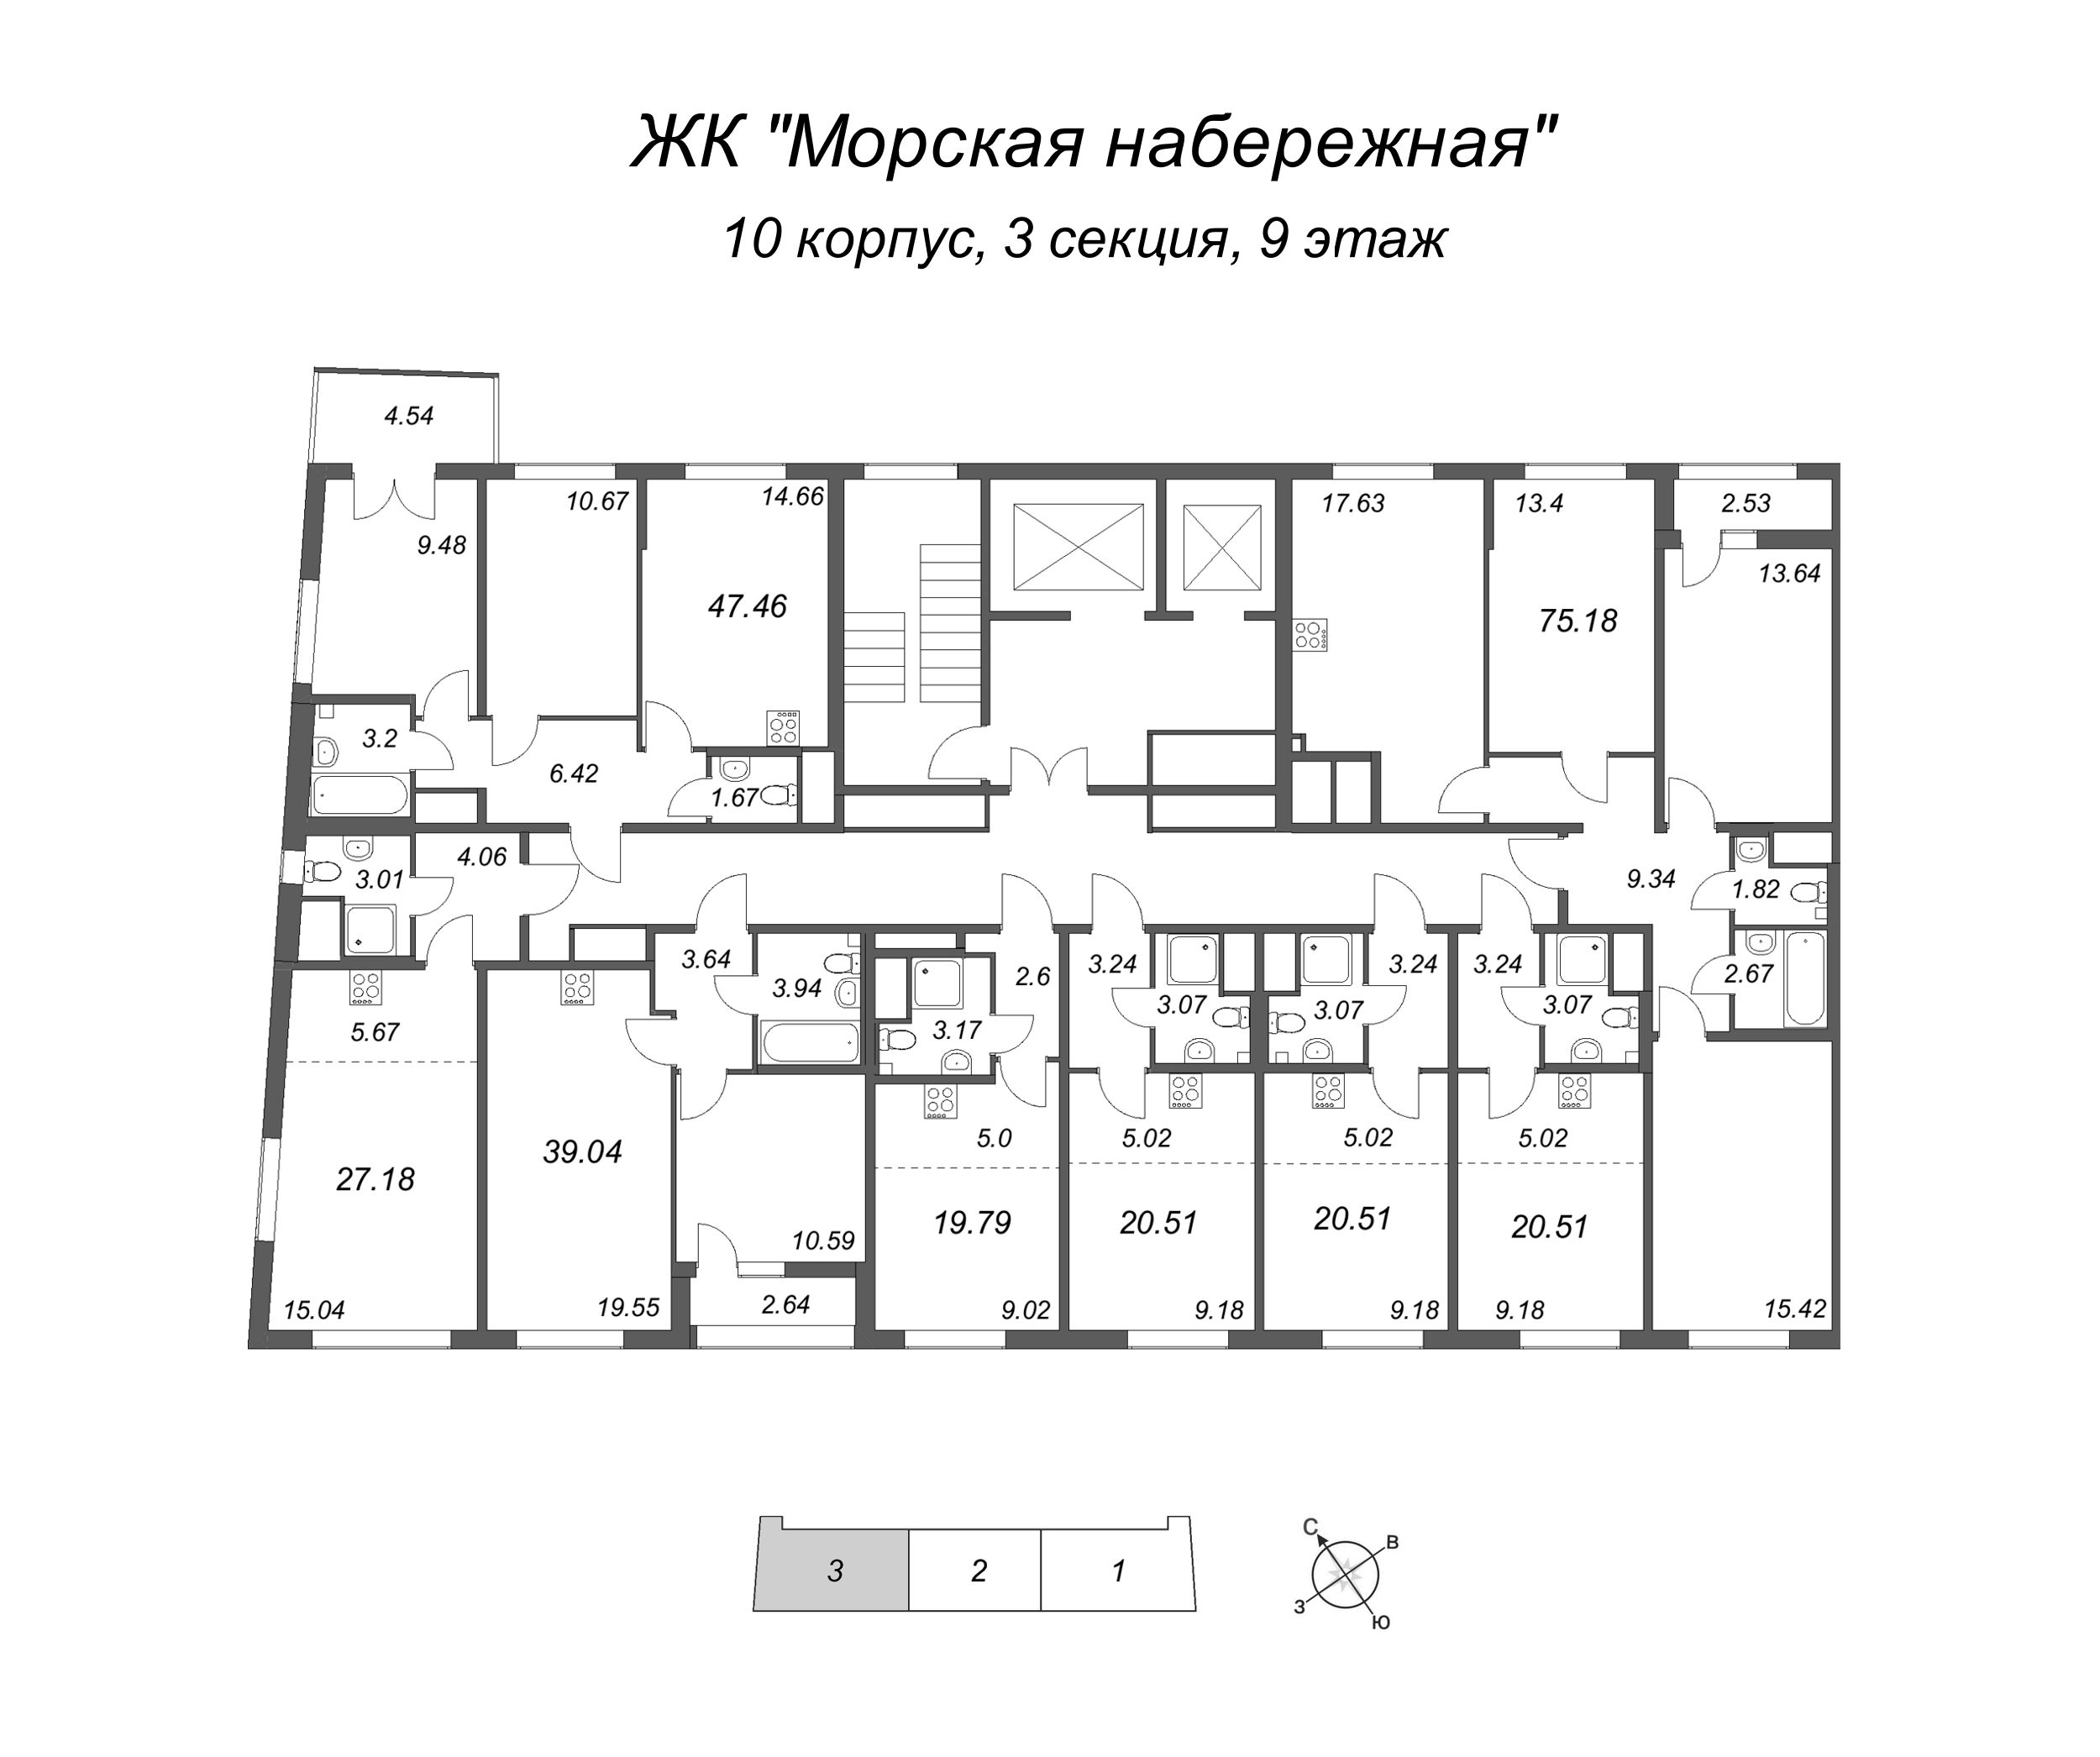 4-комнатная (Евро) квартира, 75.18 м² - планировка этажа